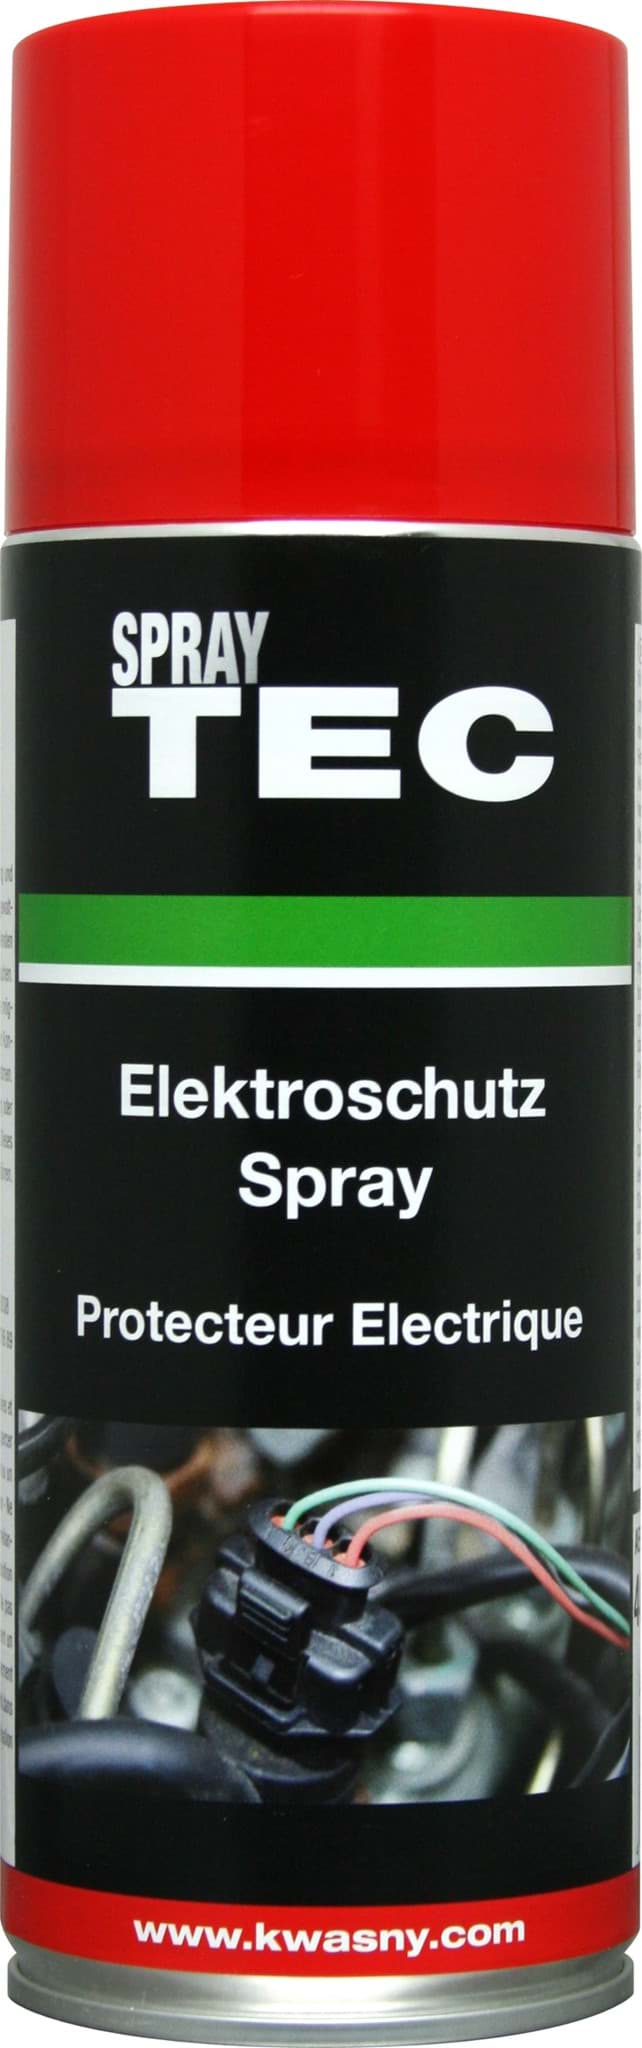 Afbeelding van Elektroschutz-Spray 400ml SprayTEC 235003